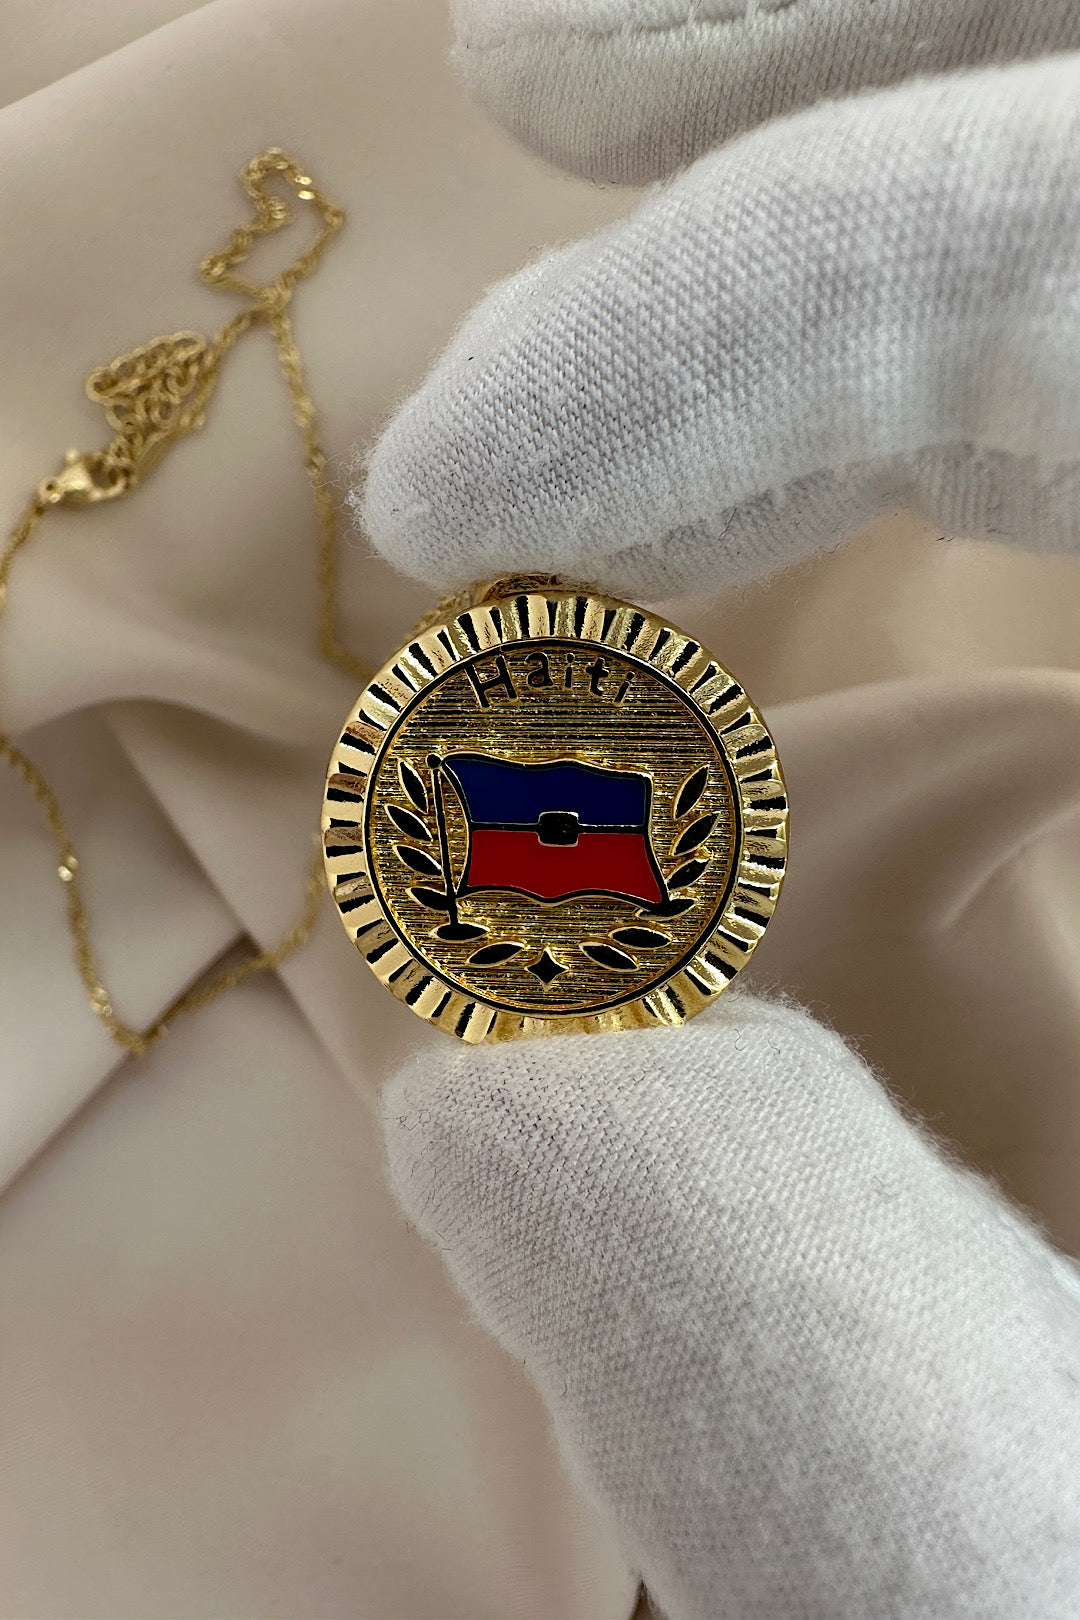 Haiti flag Necklace